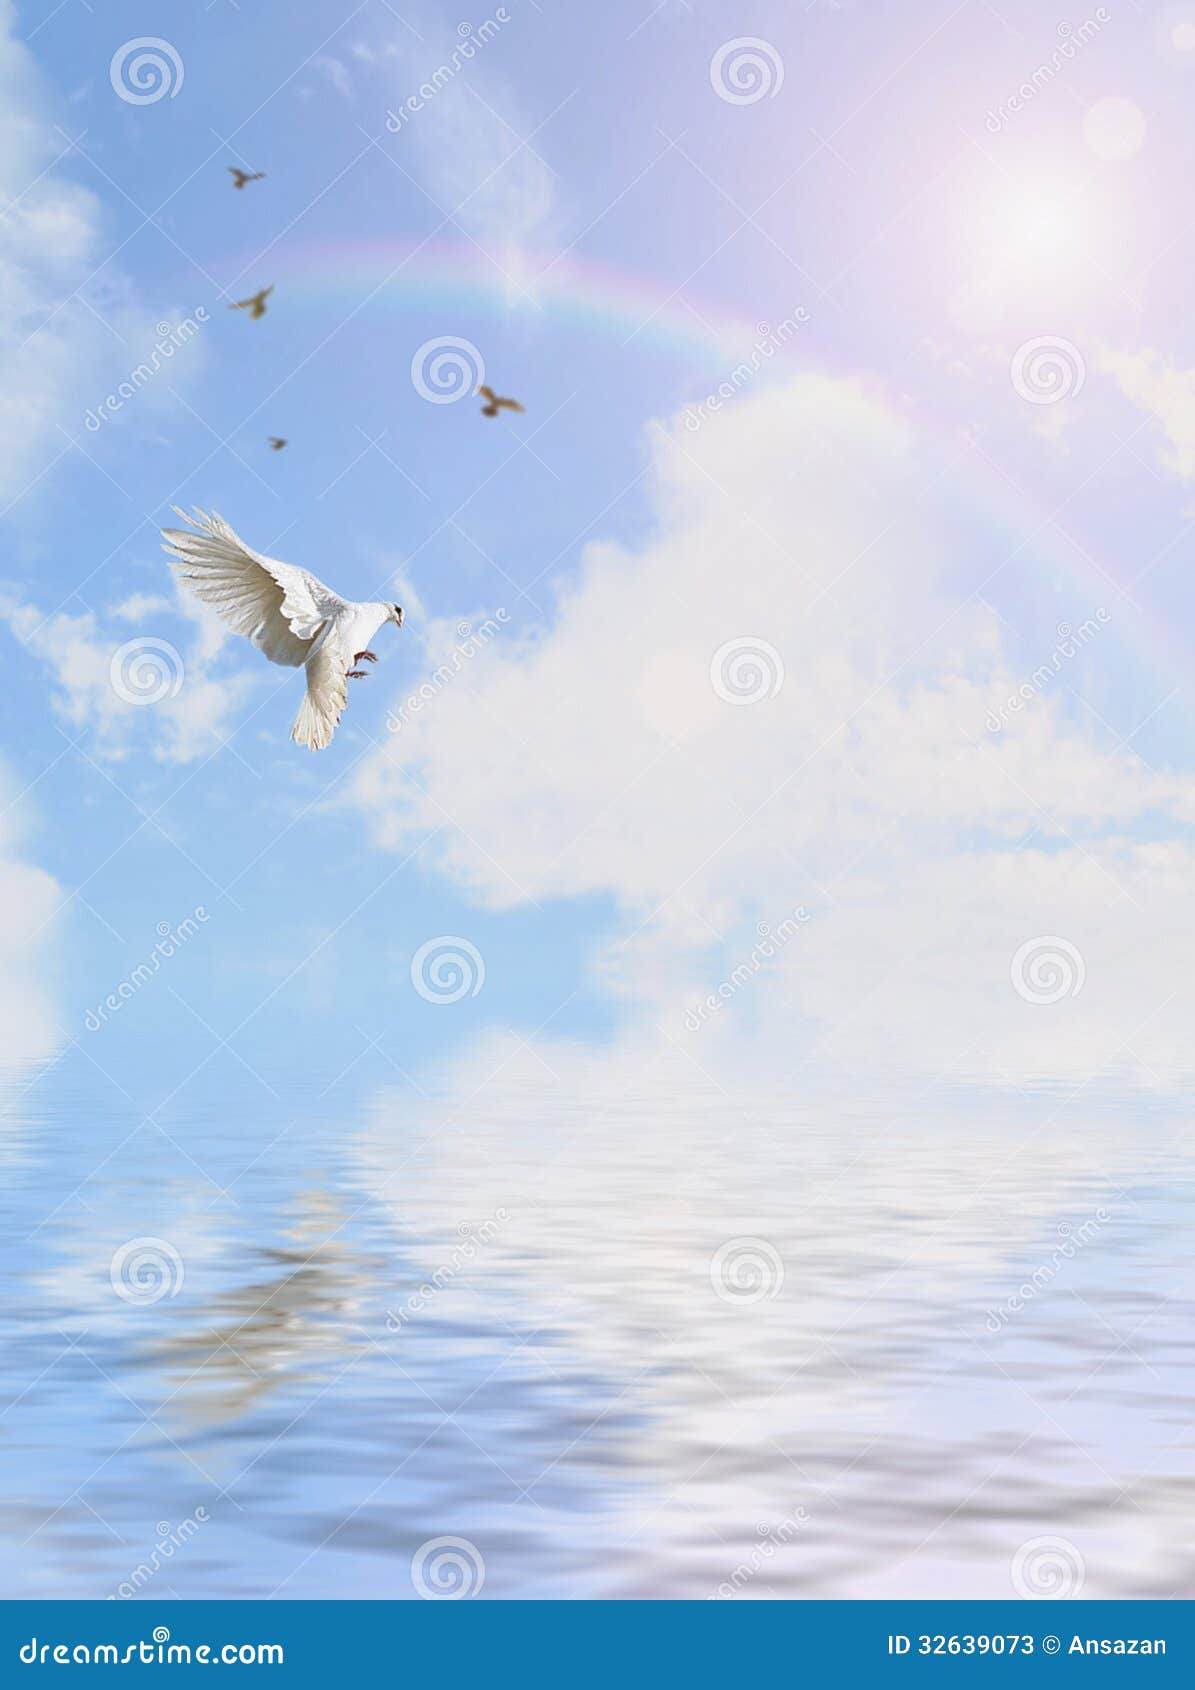 Dove in the sky stock image. Image of beak, symbols, angle - 32639073